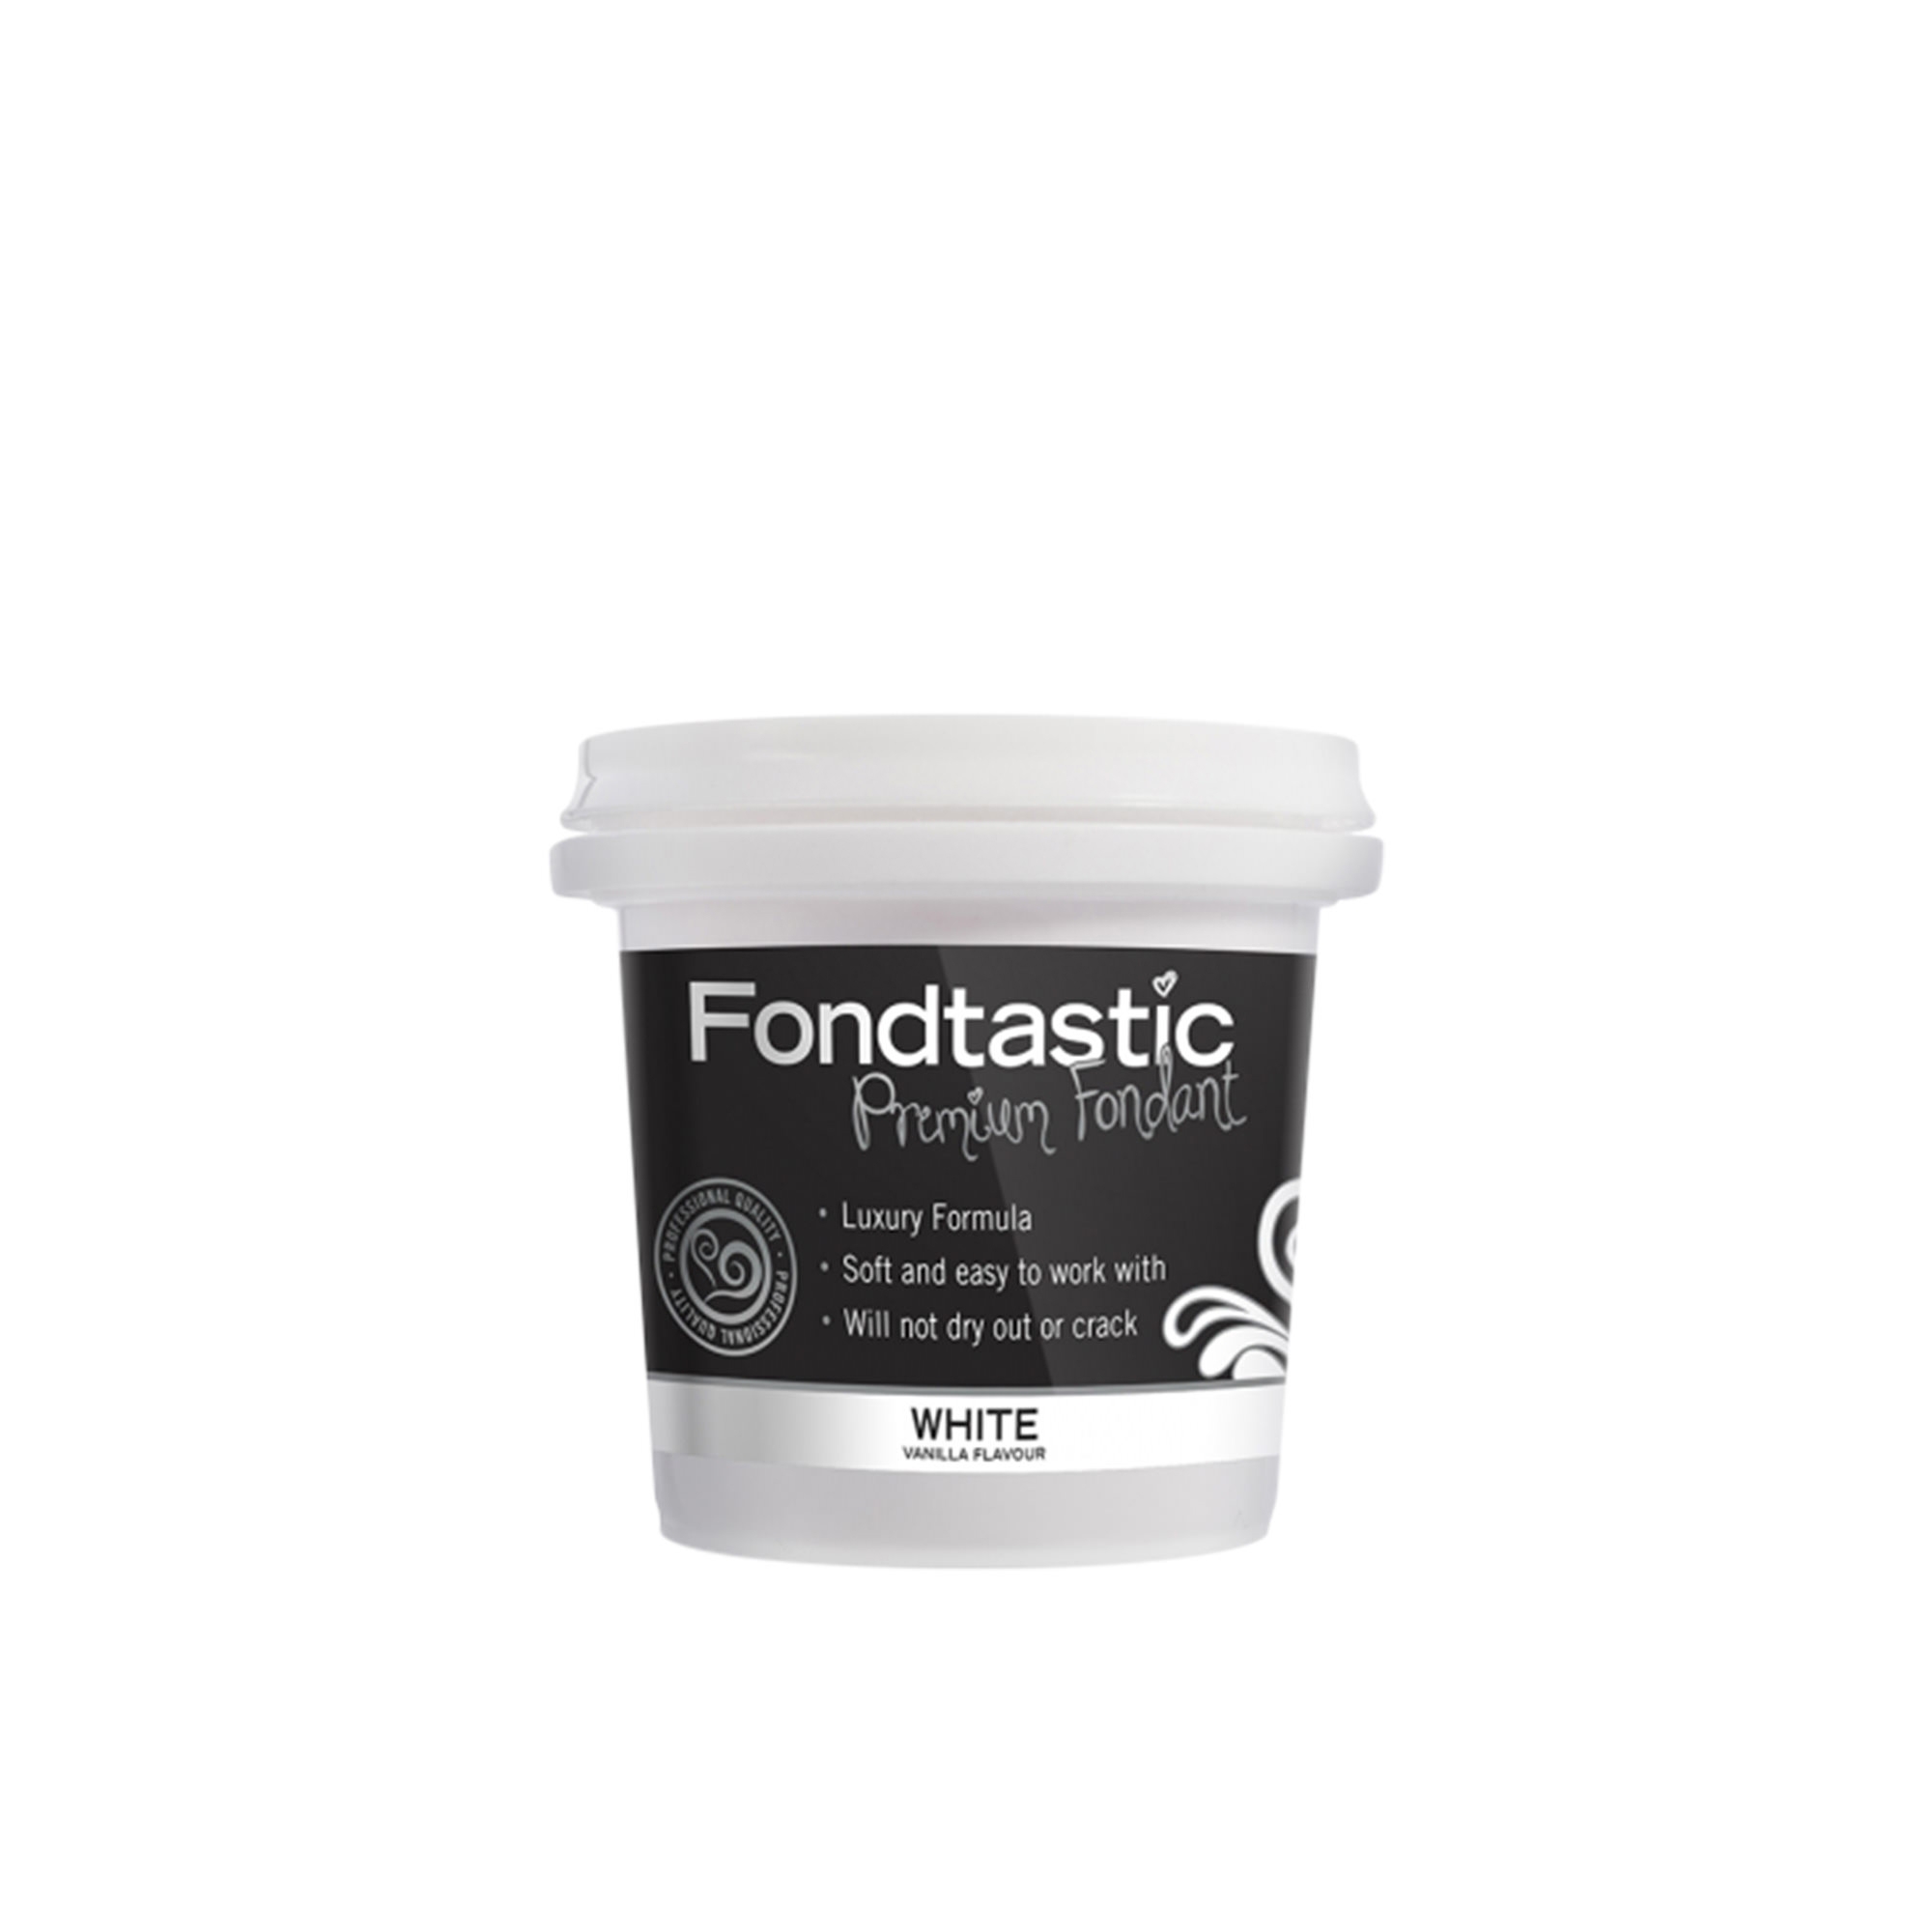 Fondtastic Premium Rolled Fondant Mini Tub White 225g Image 1